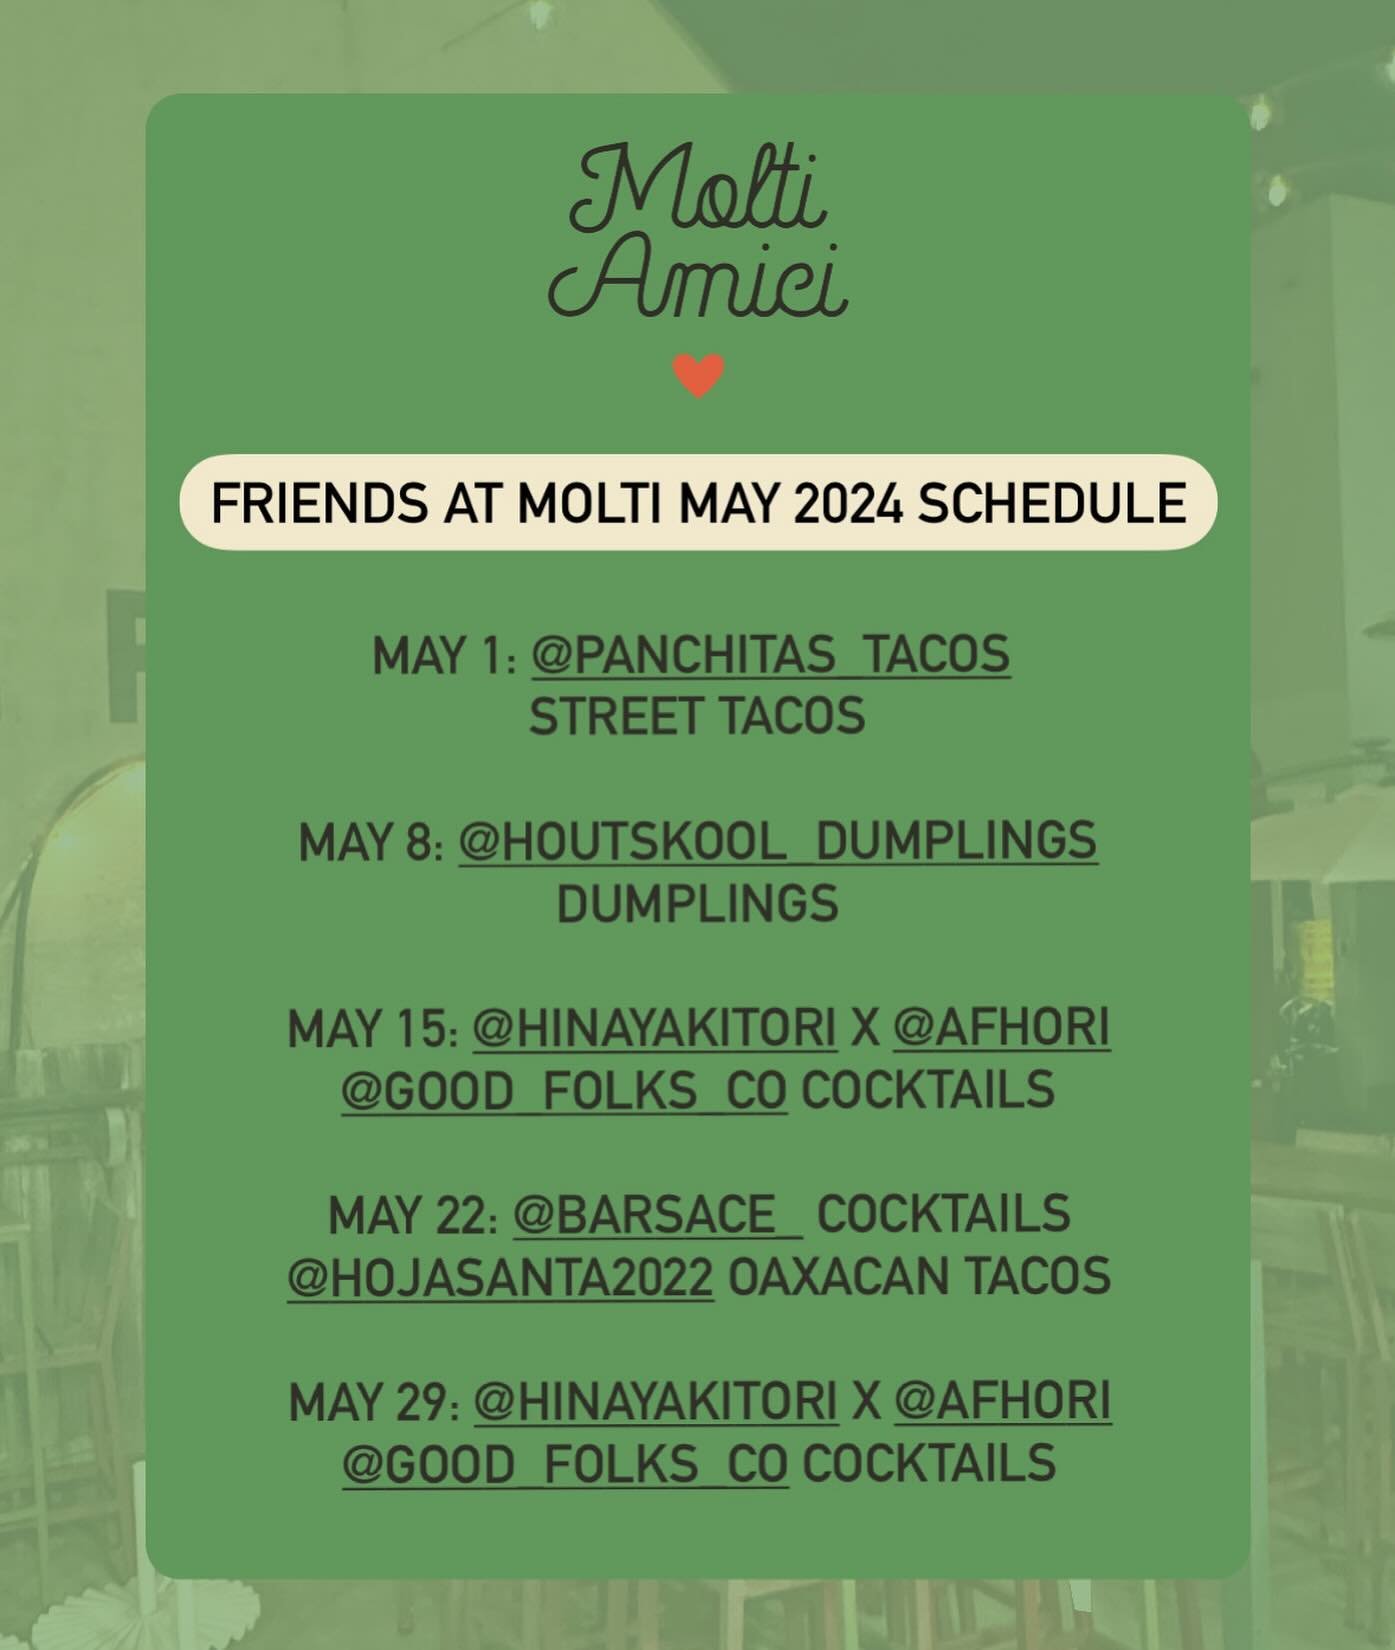 Friends at Molti &mdash; May 2024 tickets are available on @resy

MAY 1: @panchitas_tacos | Street tacos
MAY 8: @houtskool_dumplings | Dumplings 
MAY 15: @hinayakitori x @afhori Yakitori | @good_folks_co cocktails 
MAY 22: @barsace_ cocktails | @hoja